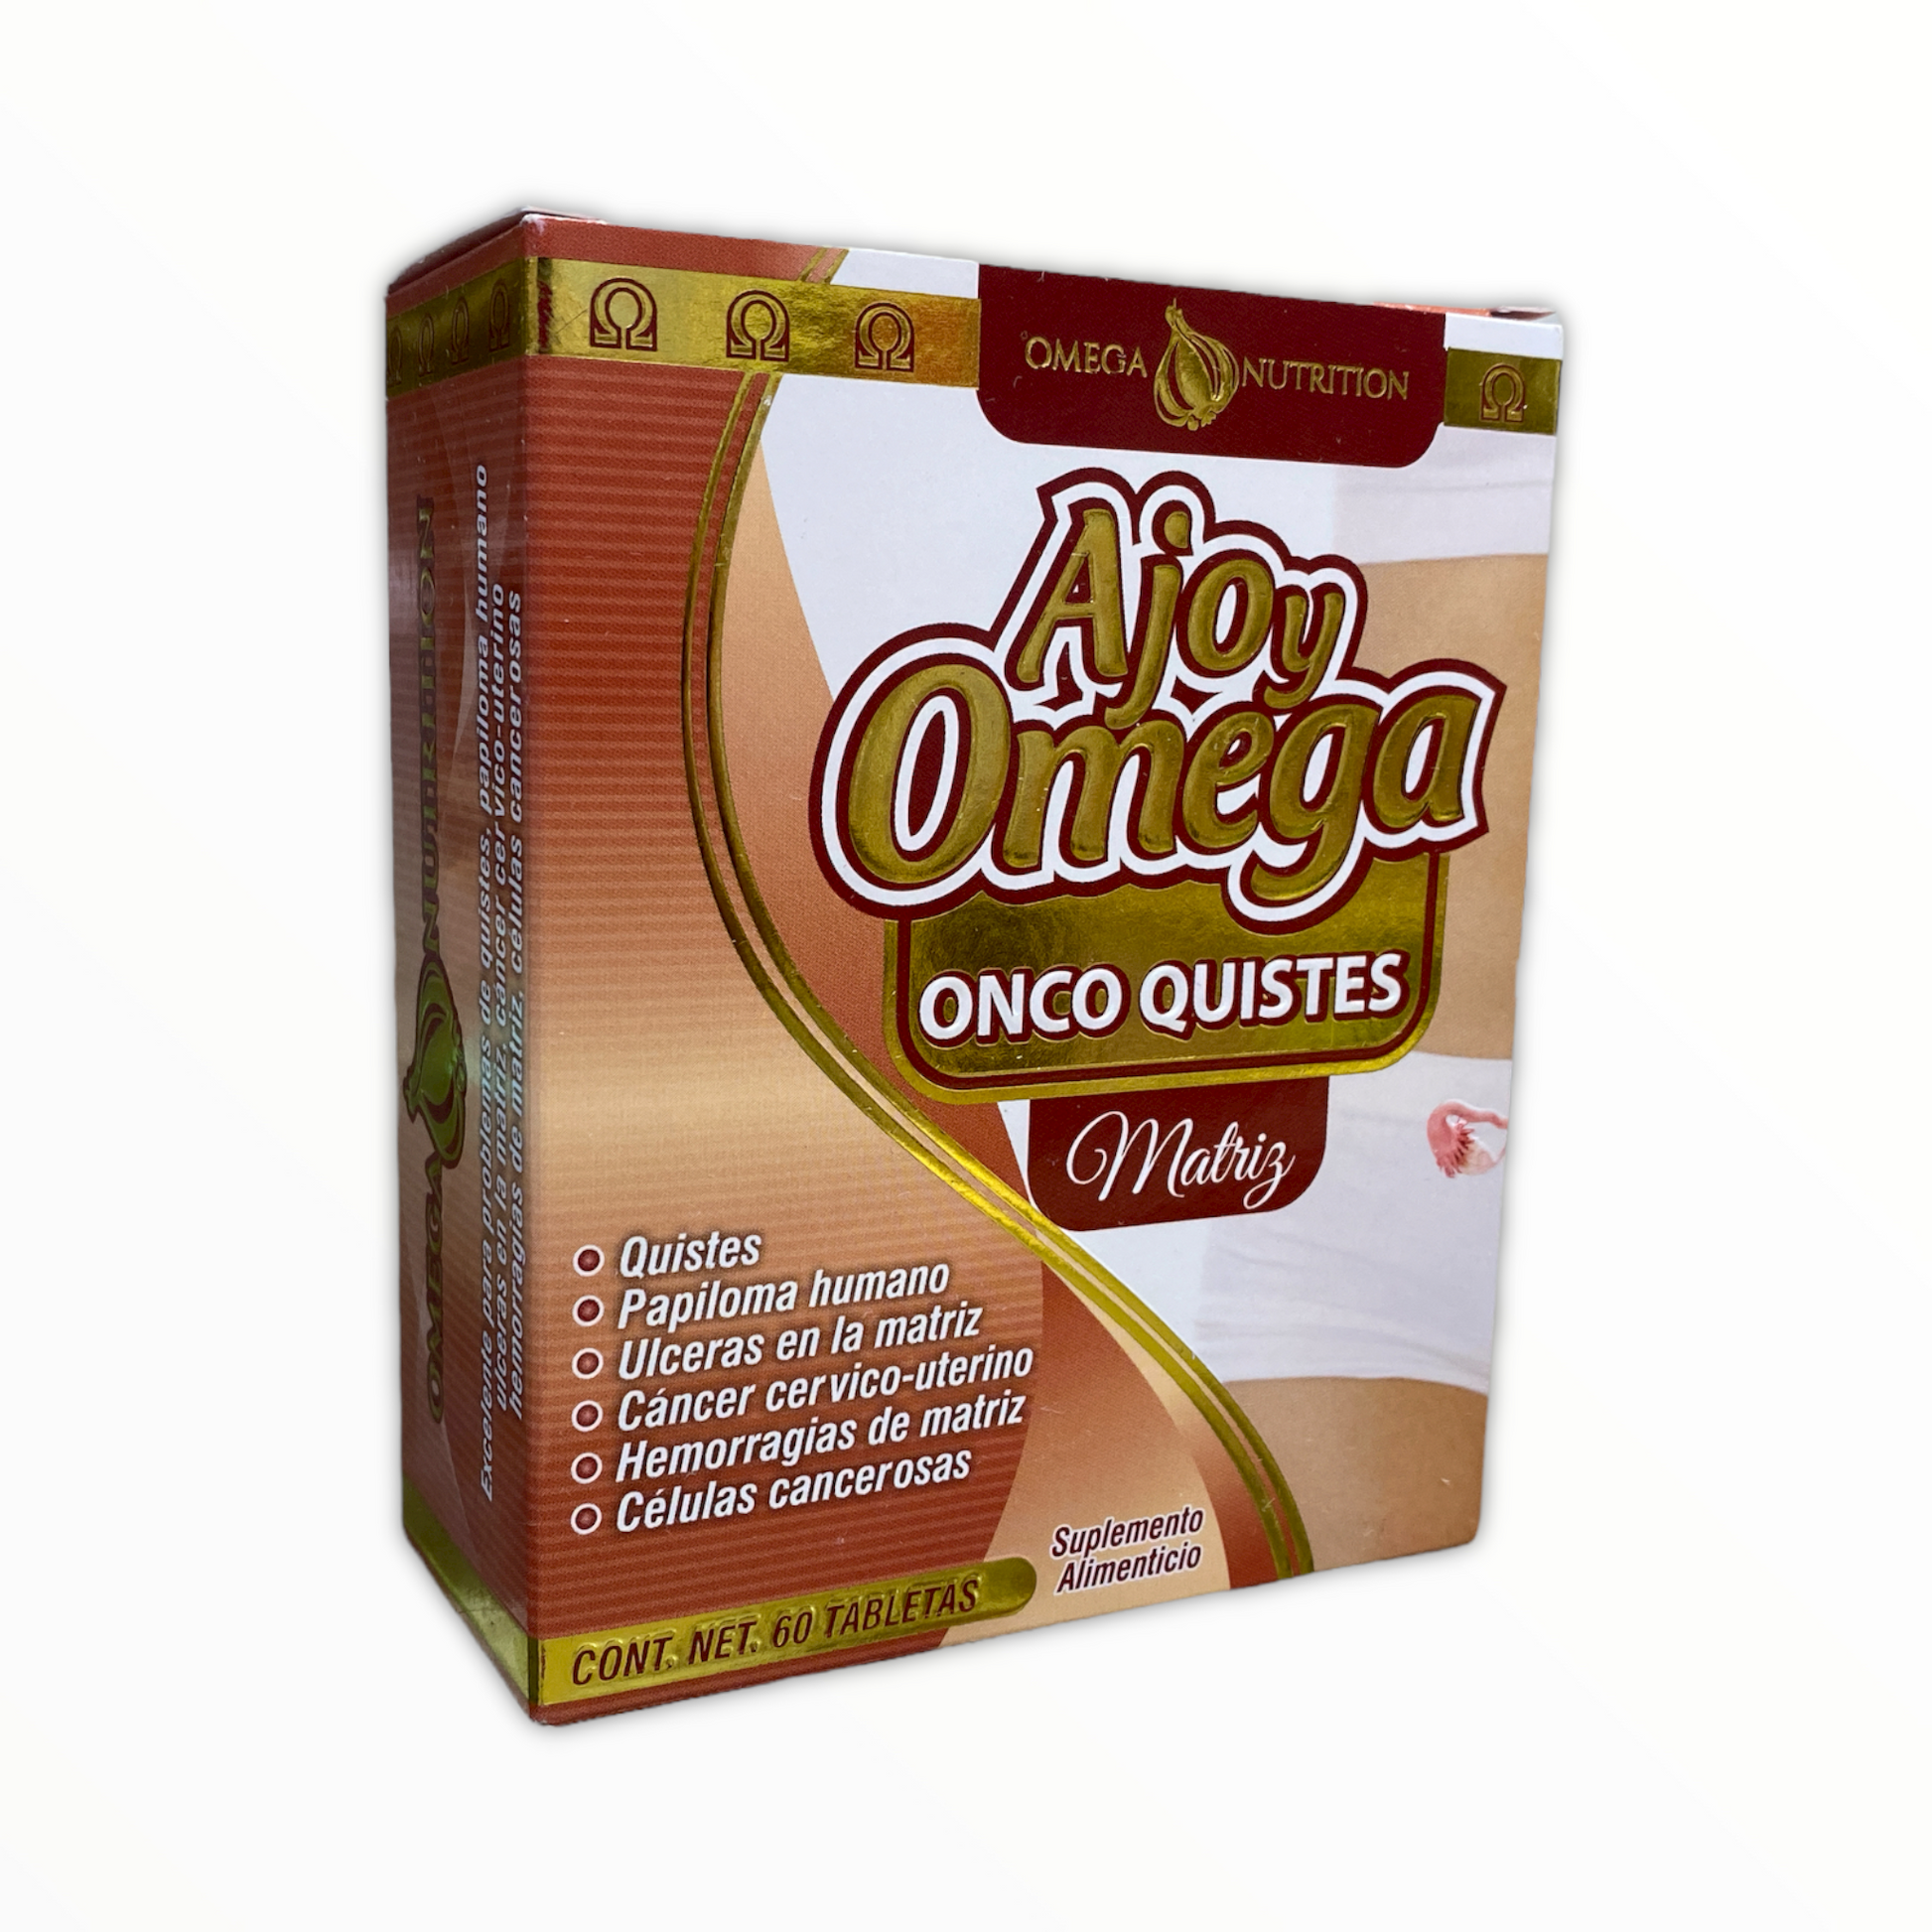 Ajo y Omega Onco Quistes 60 tabletas Omega Nutrition